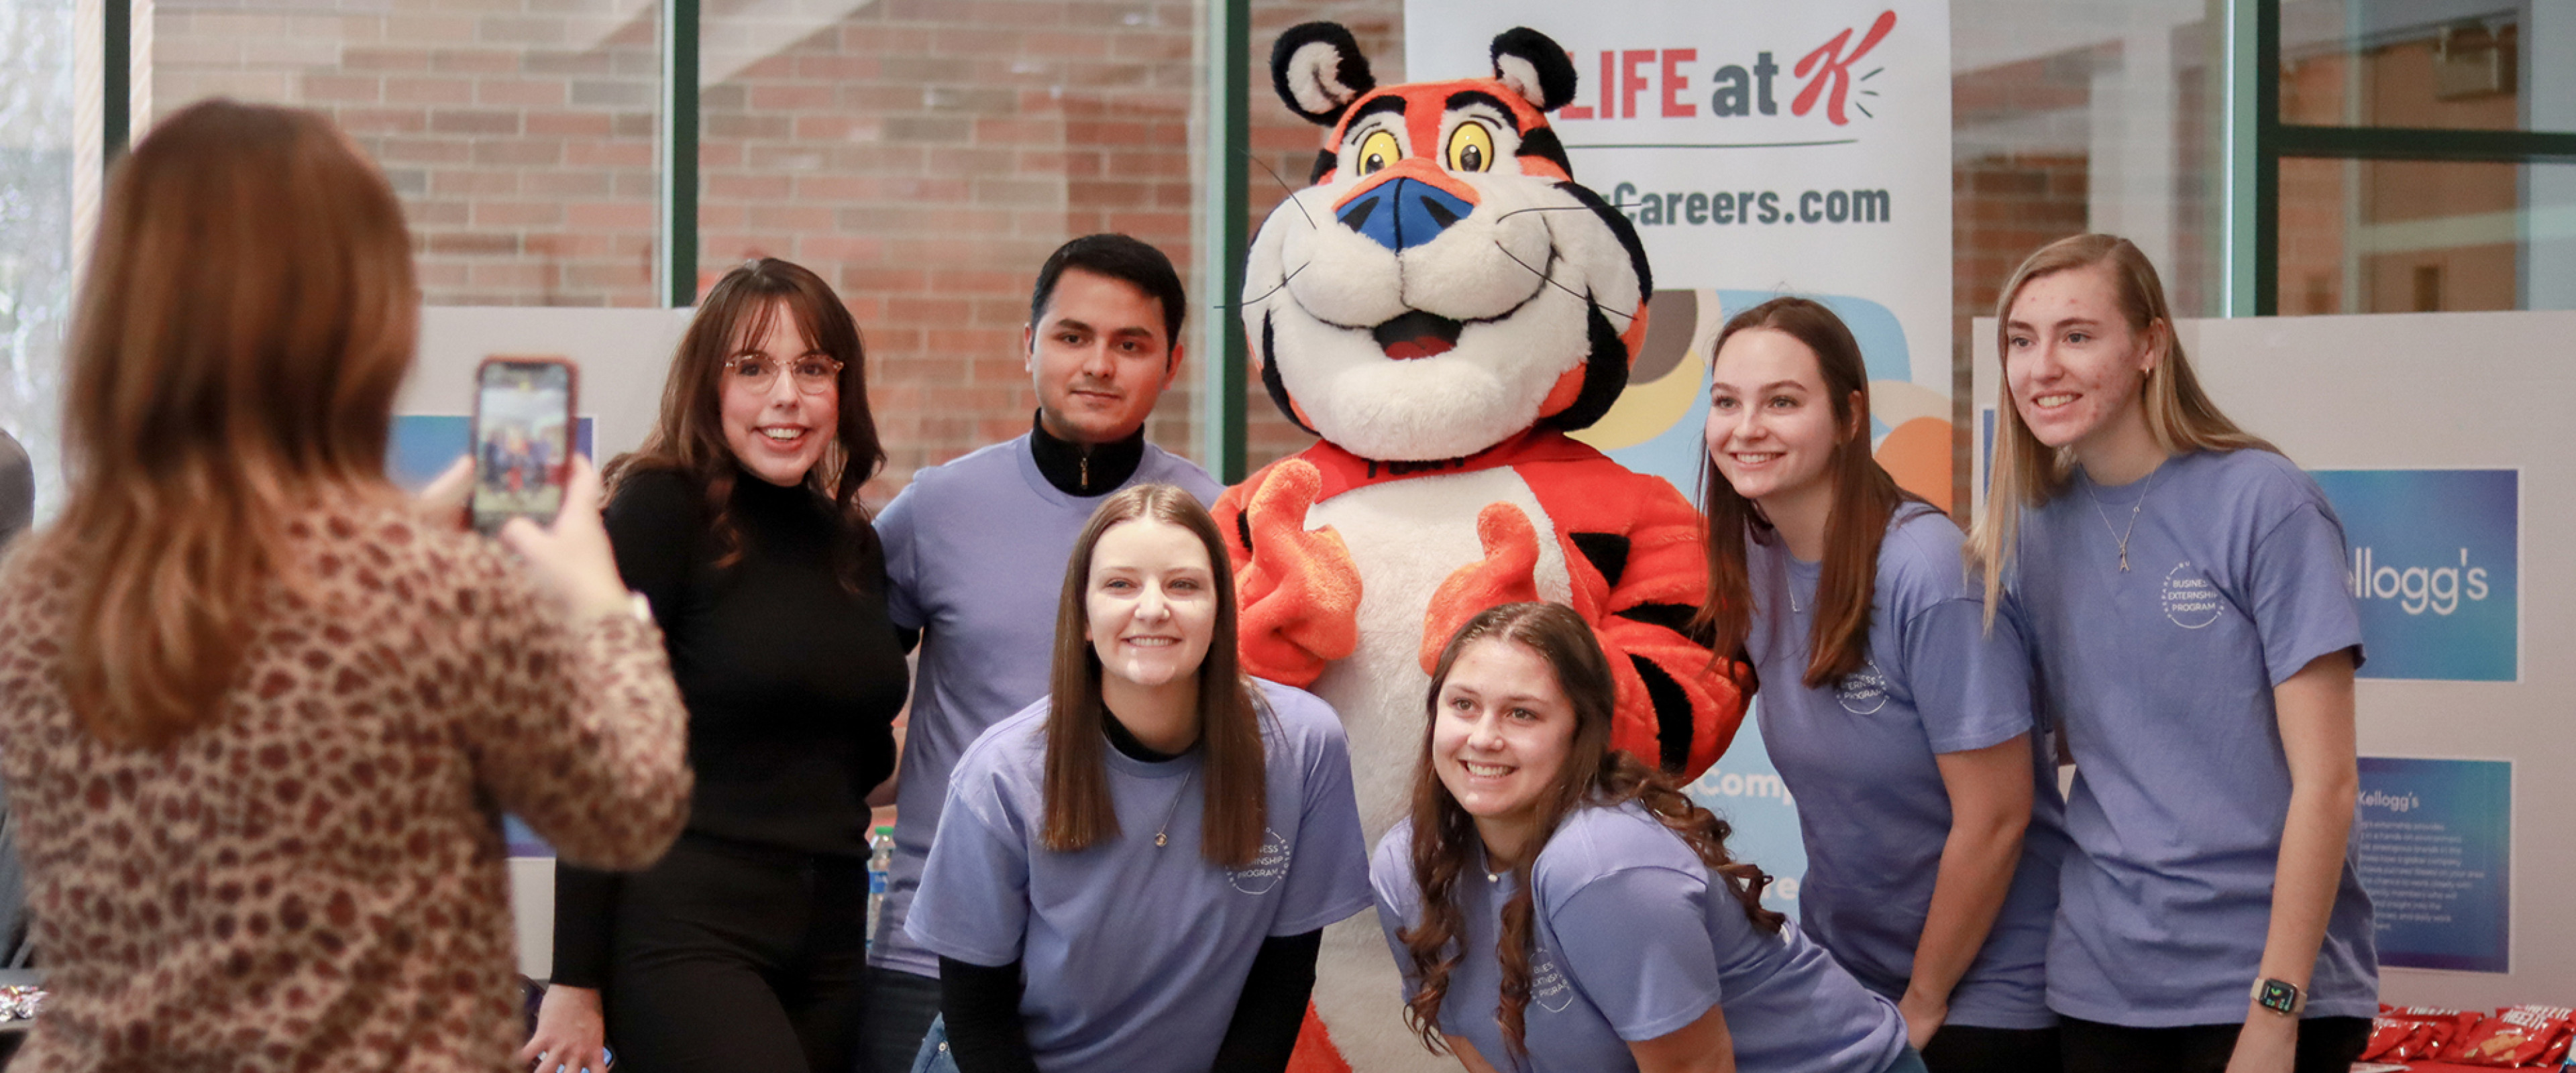 The Business Externship Program students are grabbing a photo with Kellogg's mascot, Tony the Tiger.